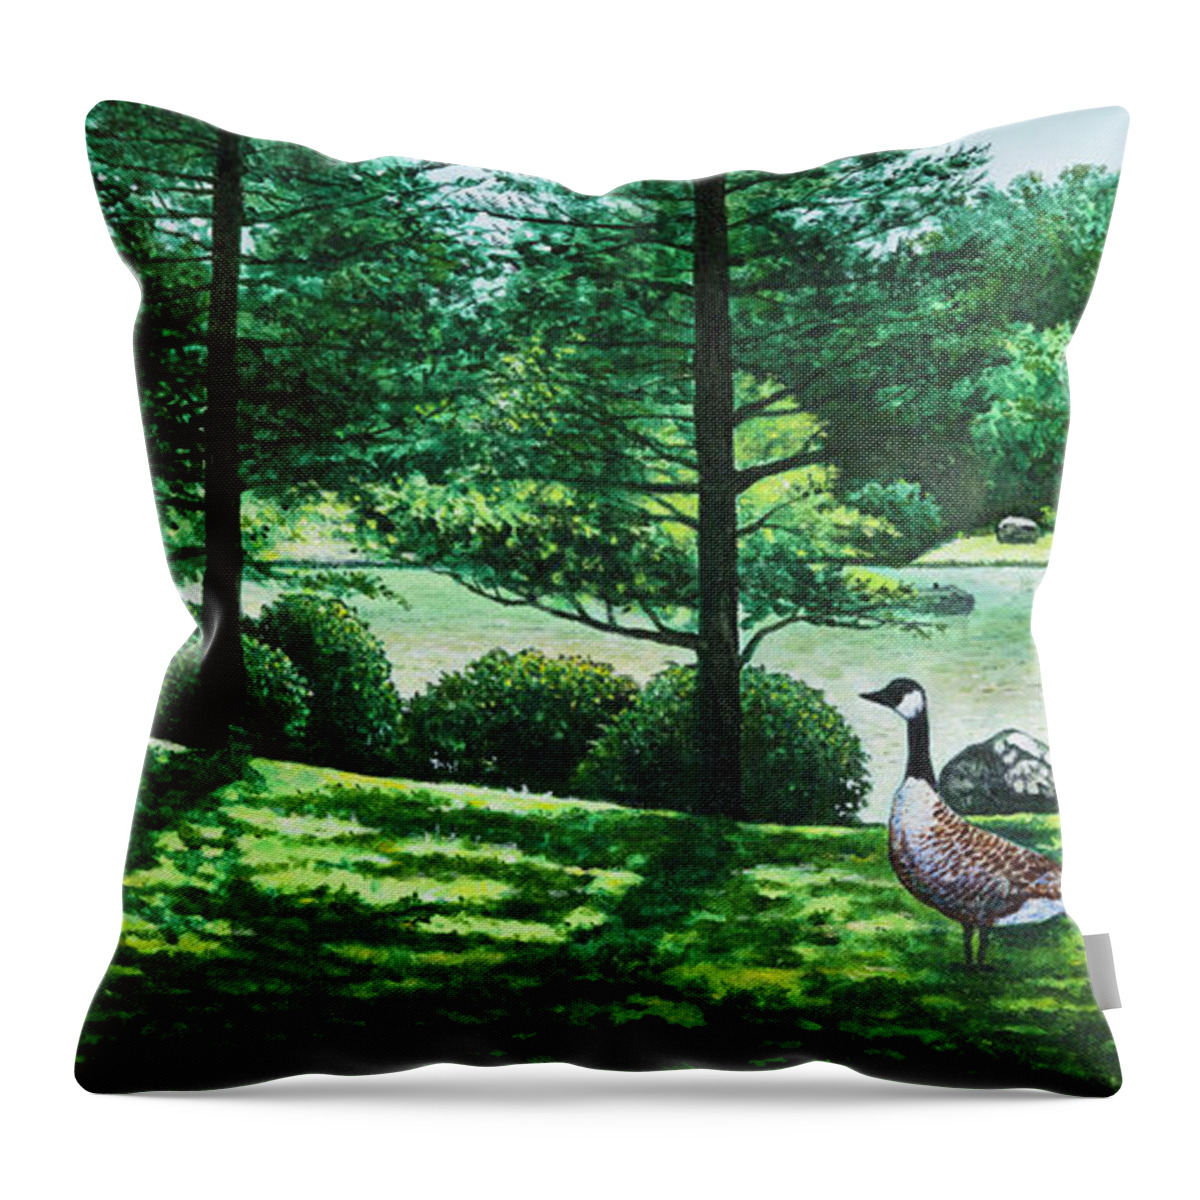 Missouri Botanical Gardens Throw Pillow featuring the painting Missouri Botanical Gardens Lake Scene by Michael Frank